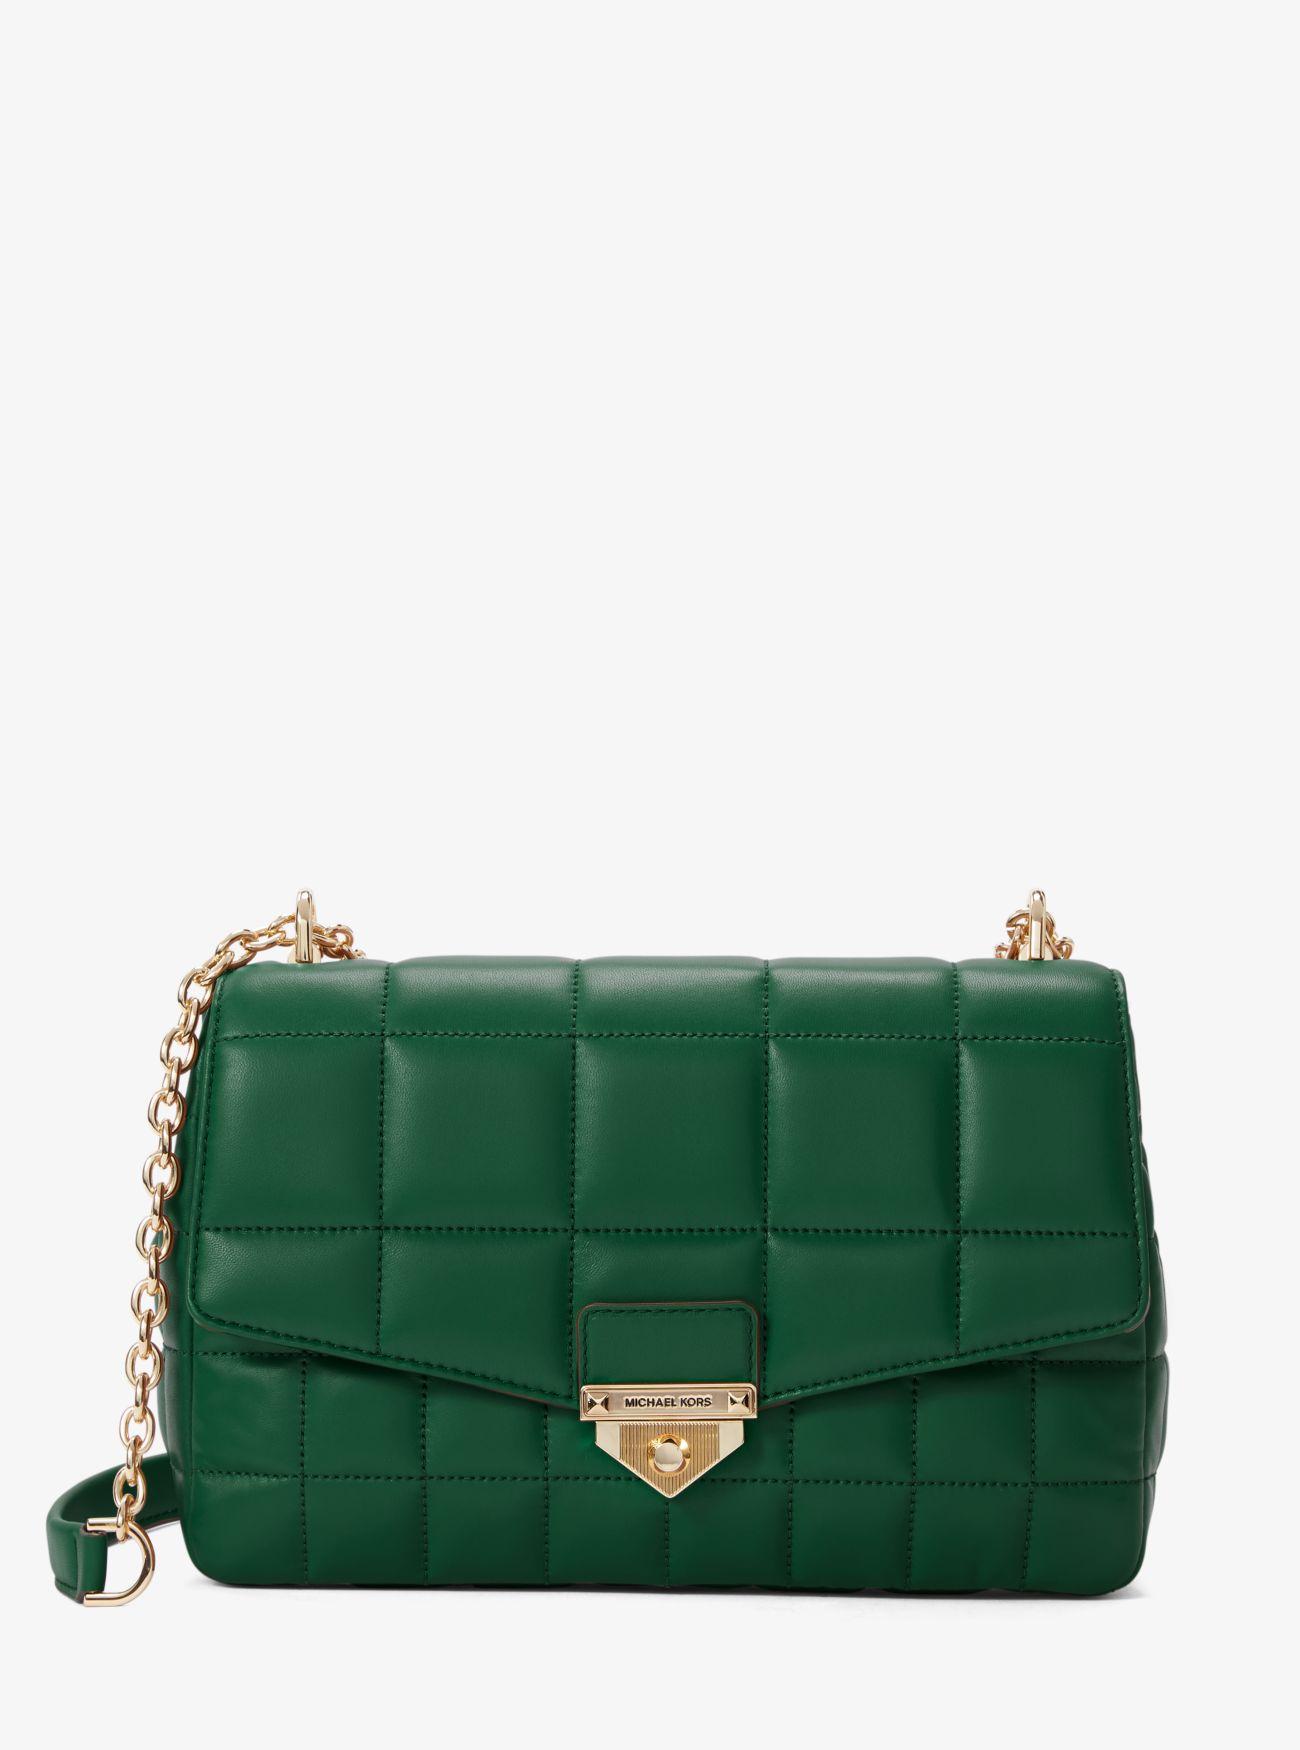 Michael Kors Small Leather Bucket Crossbody Bag Messenger Handbag Purse  Green 194900915516 | eBay